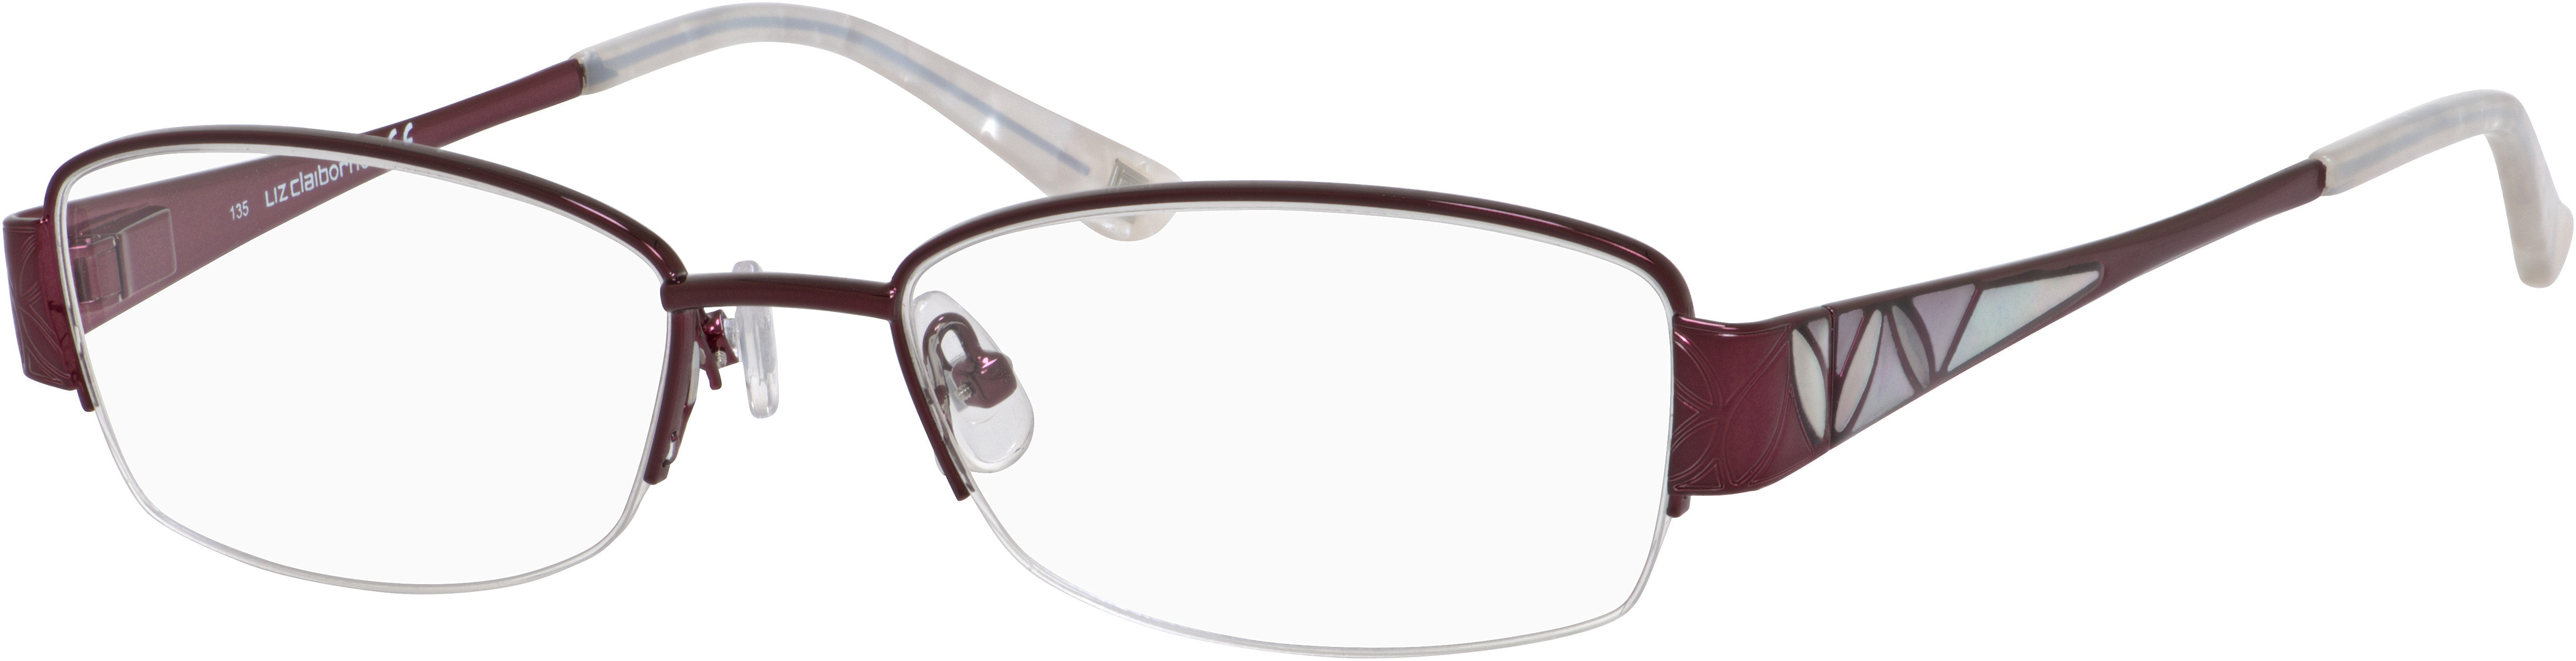  Liz Claiborne 319 Rectangular Eyeglasses 068V-068V  Burgundy (00 Demo Lens)